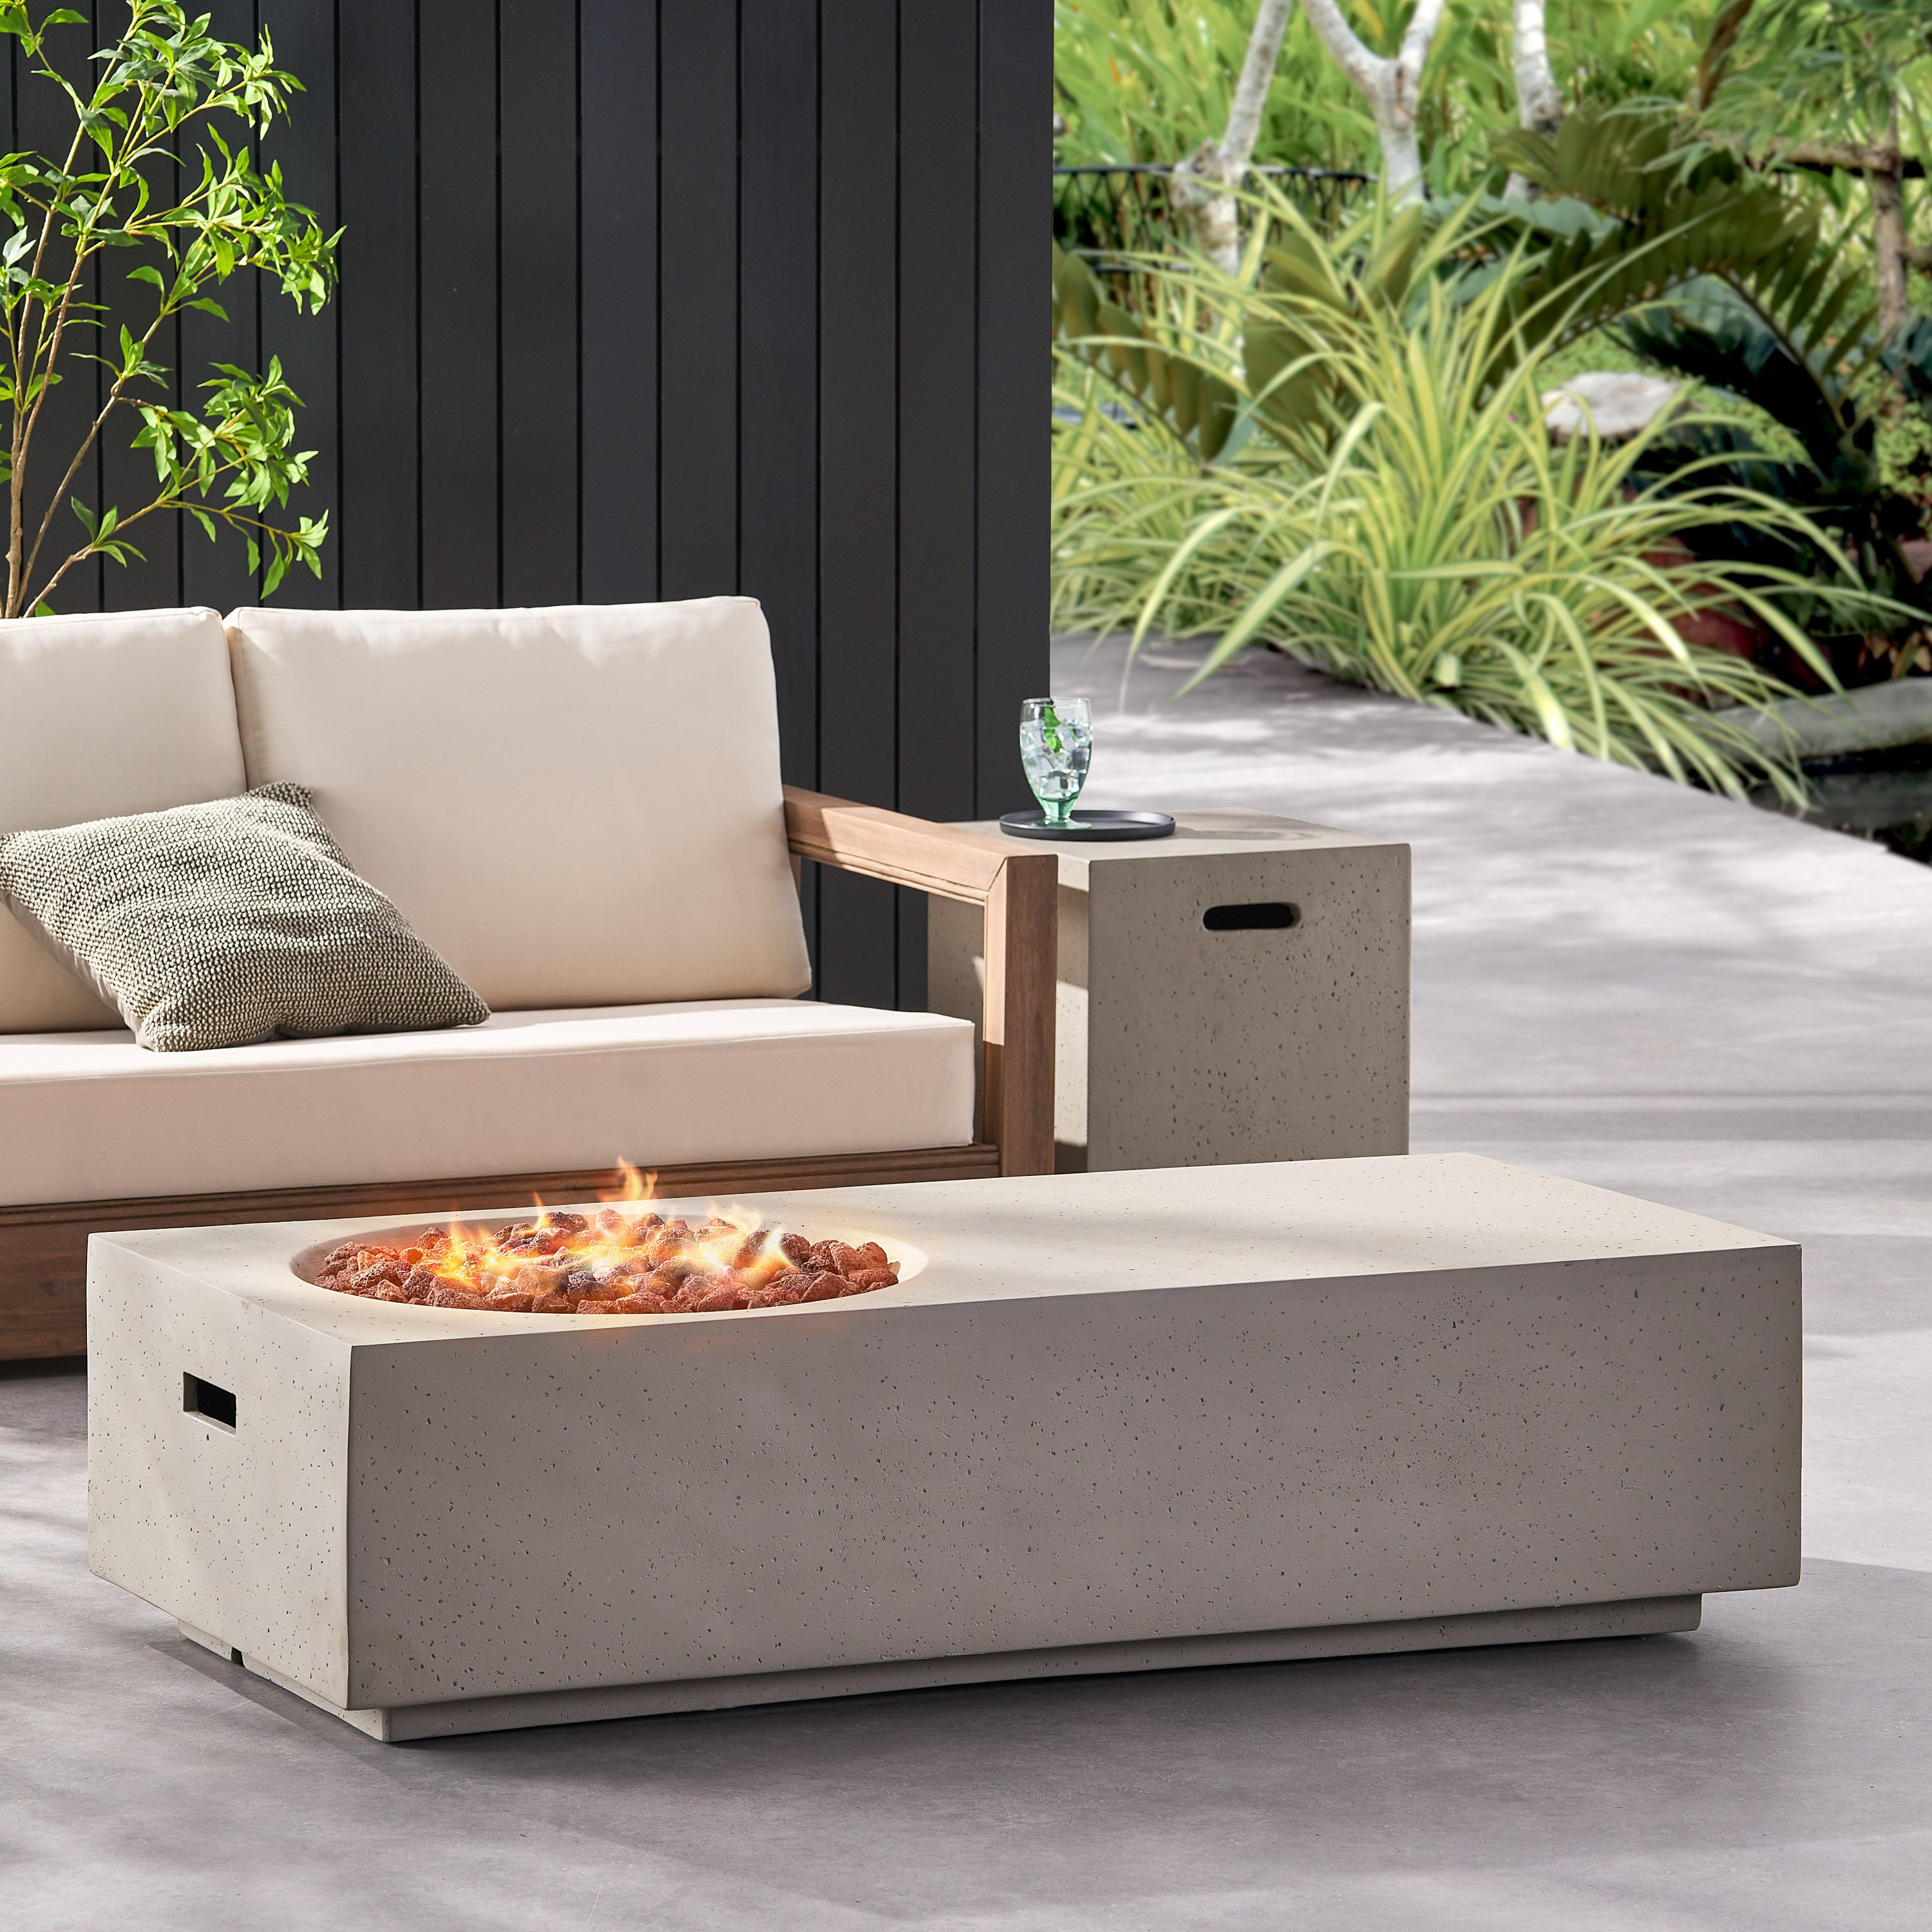 Boneva Concrete Propane Outdoor Fire Pit Table